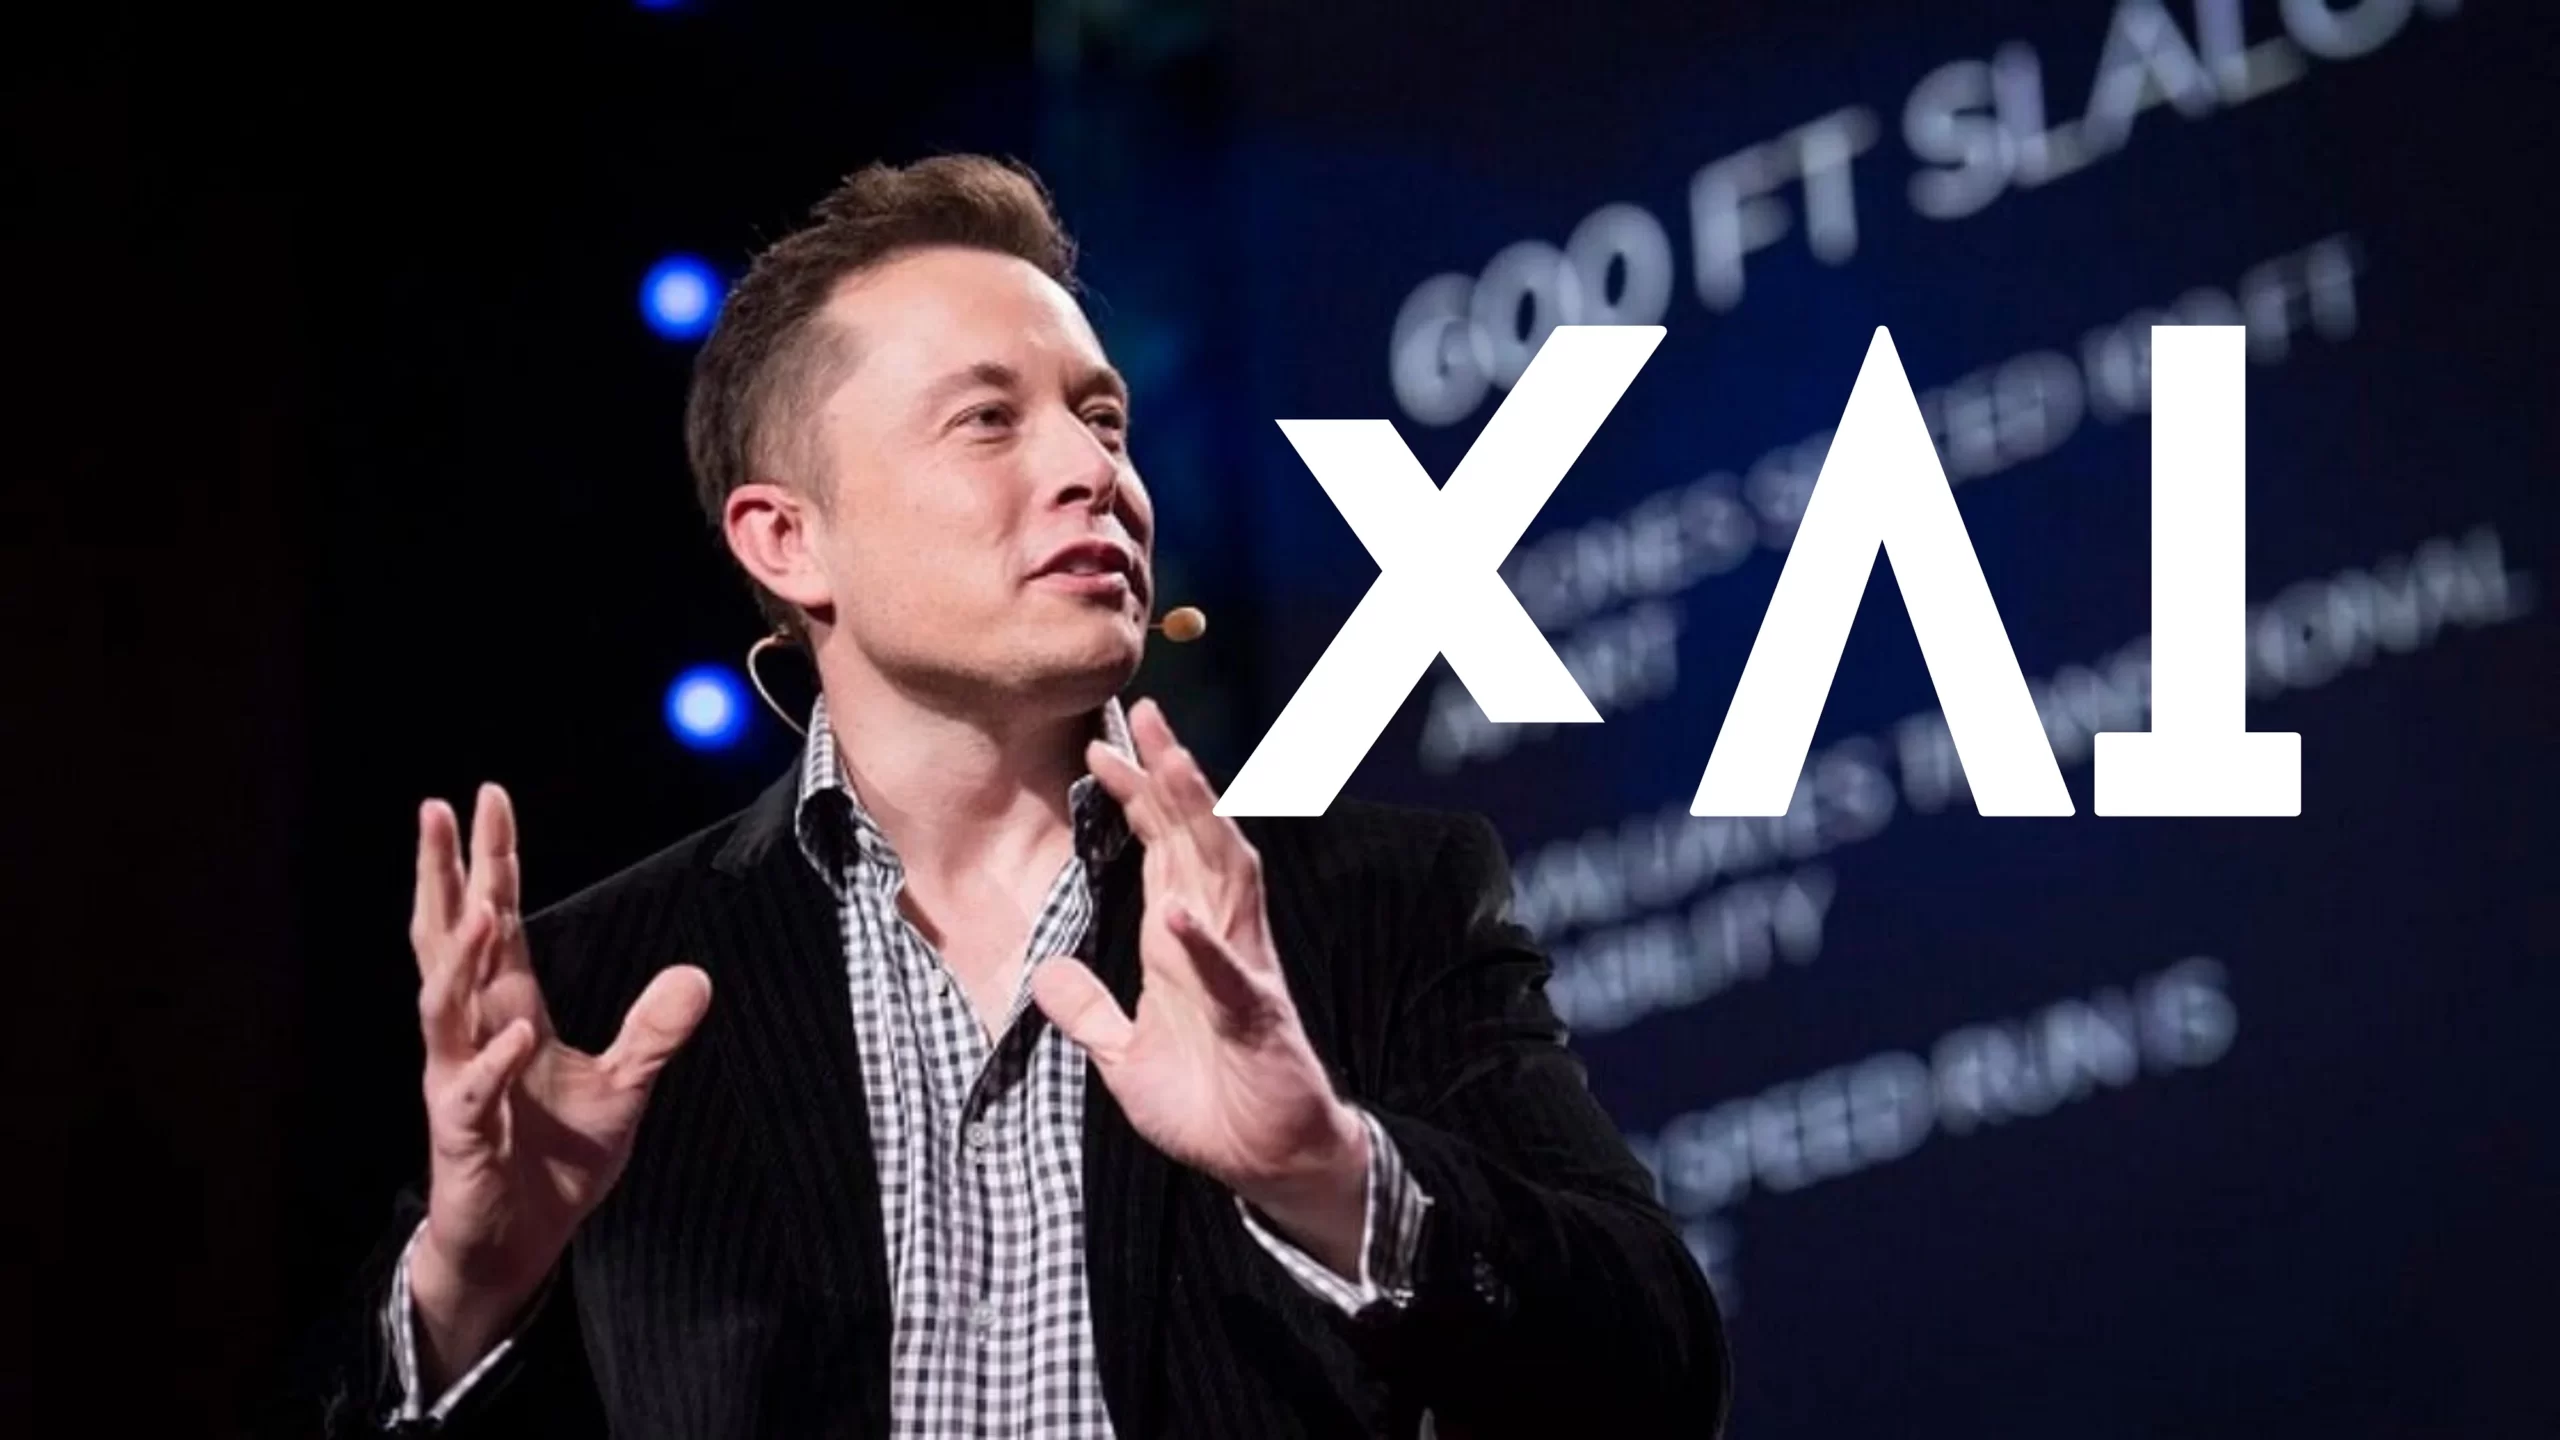 Elon Musk Establishes a New AI Company Called "xAI"